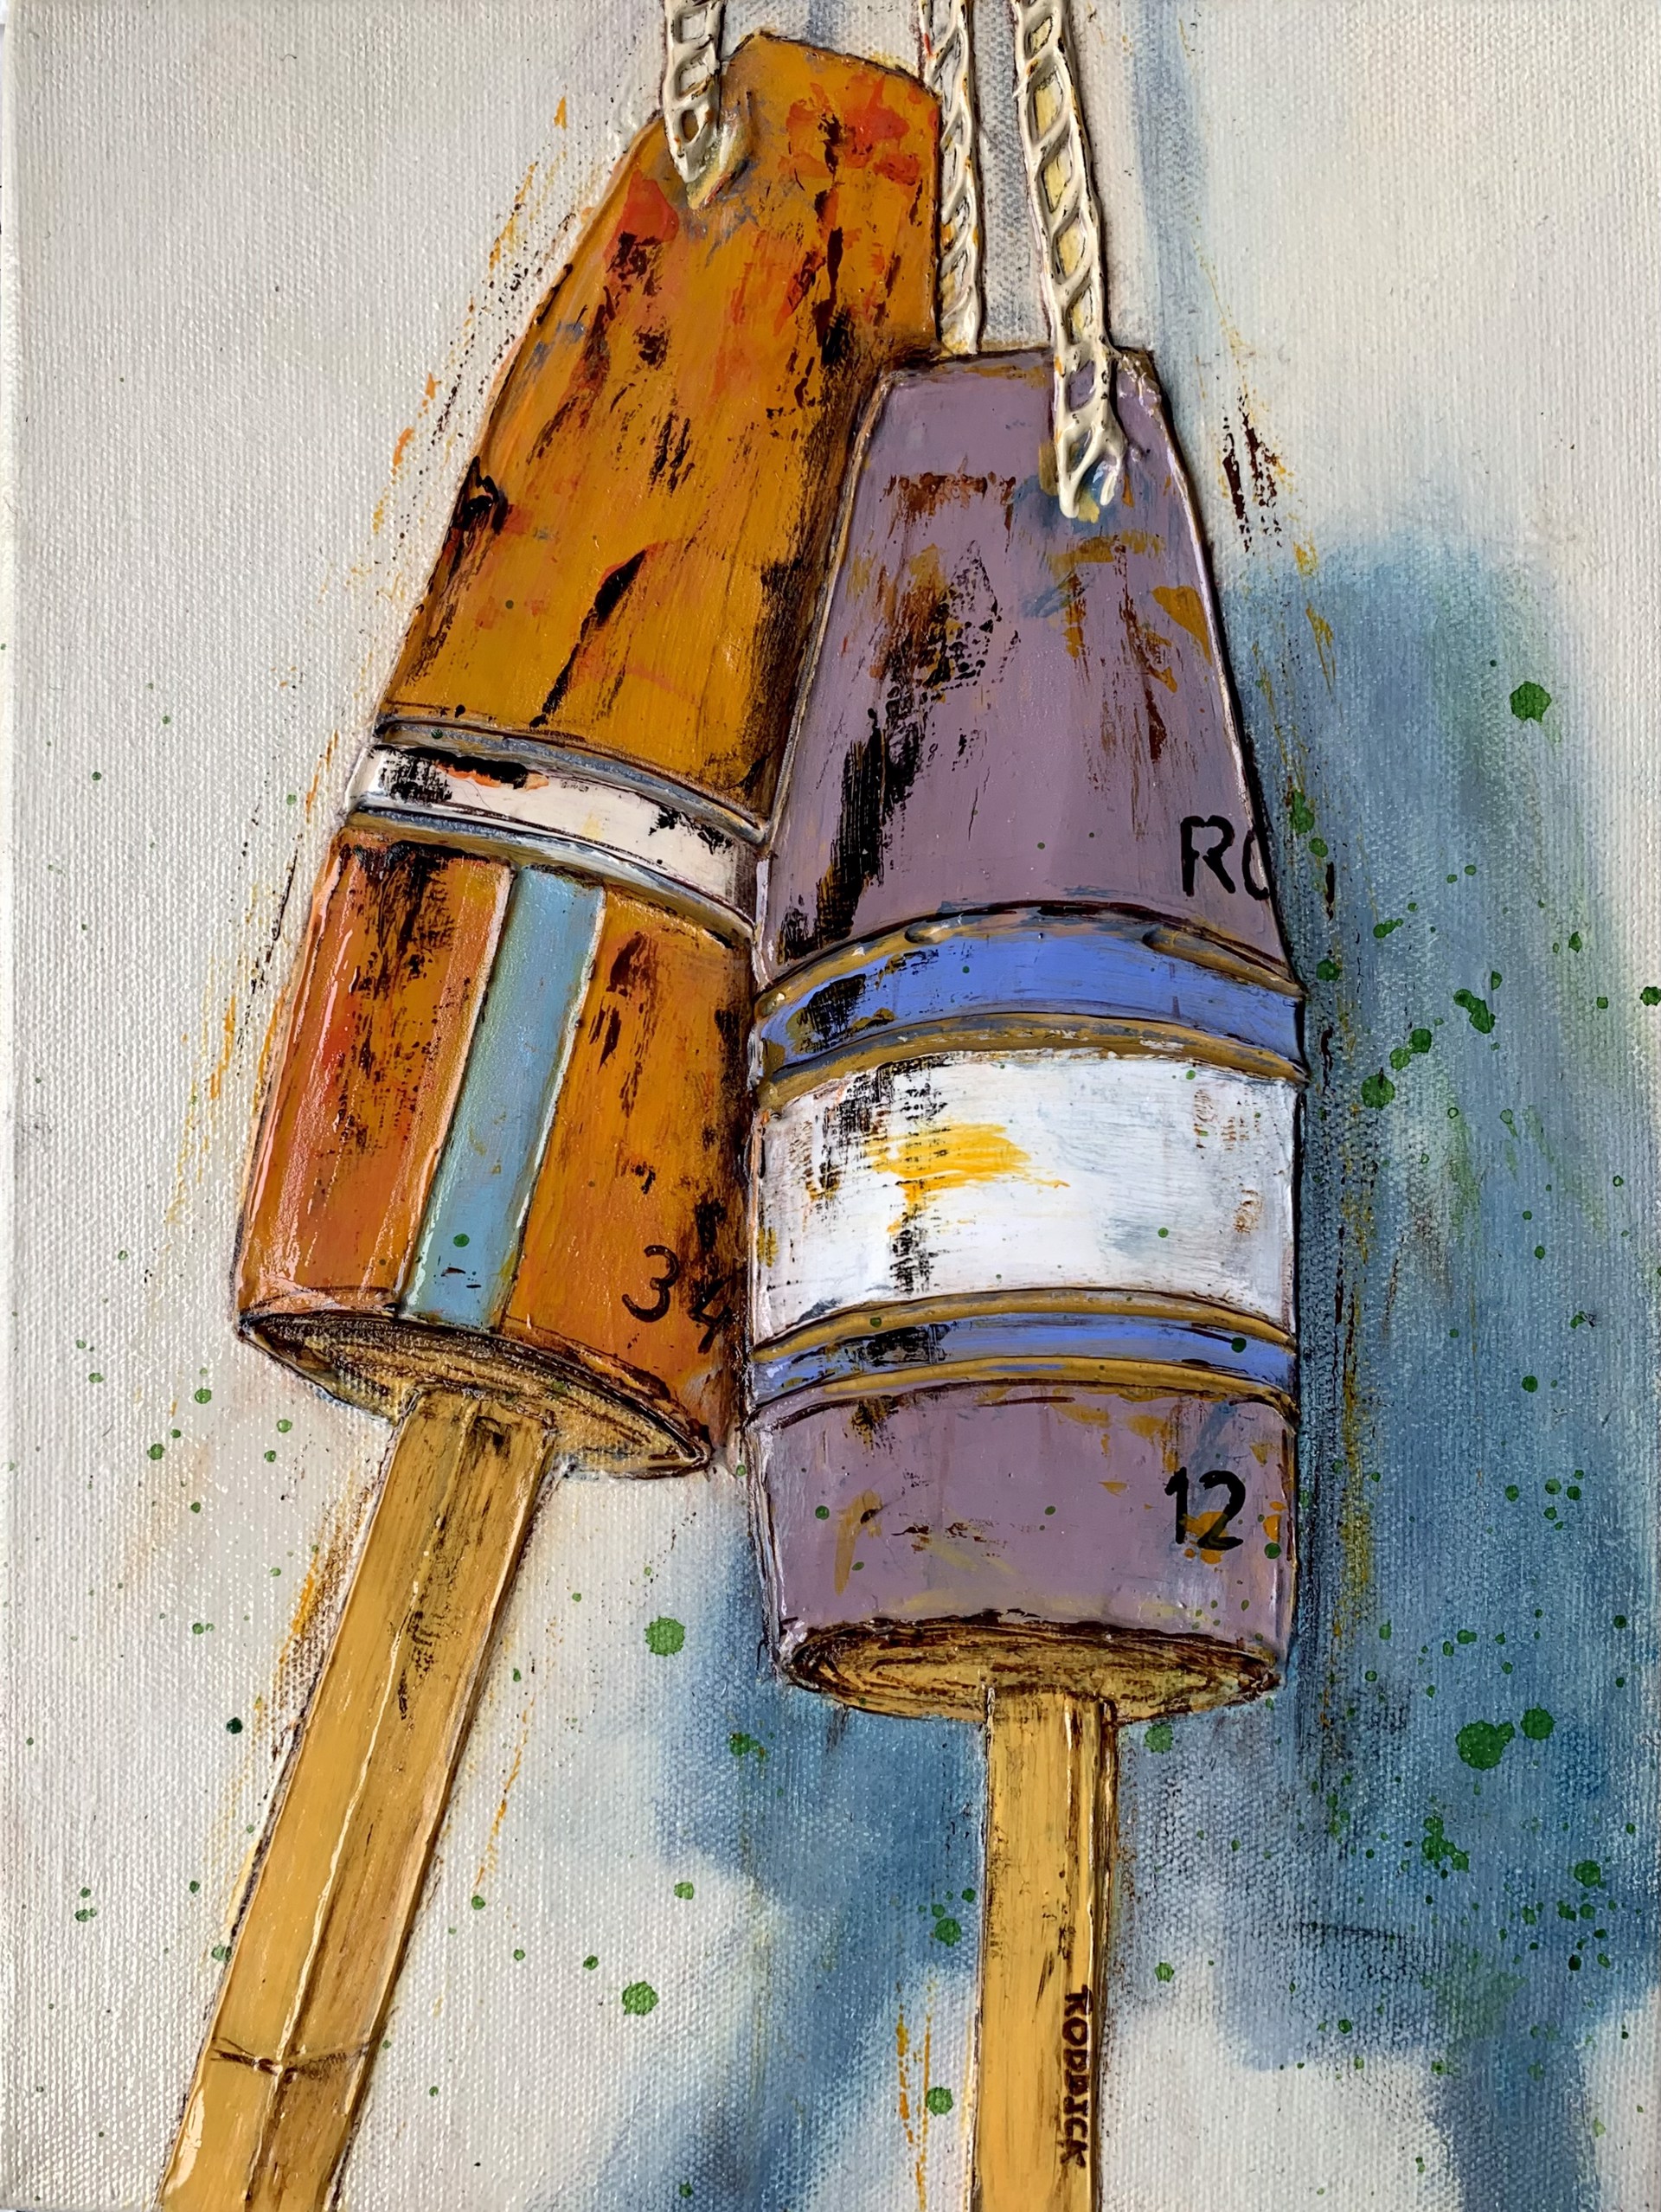 Buoy #14 by Christopher Roddick